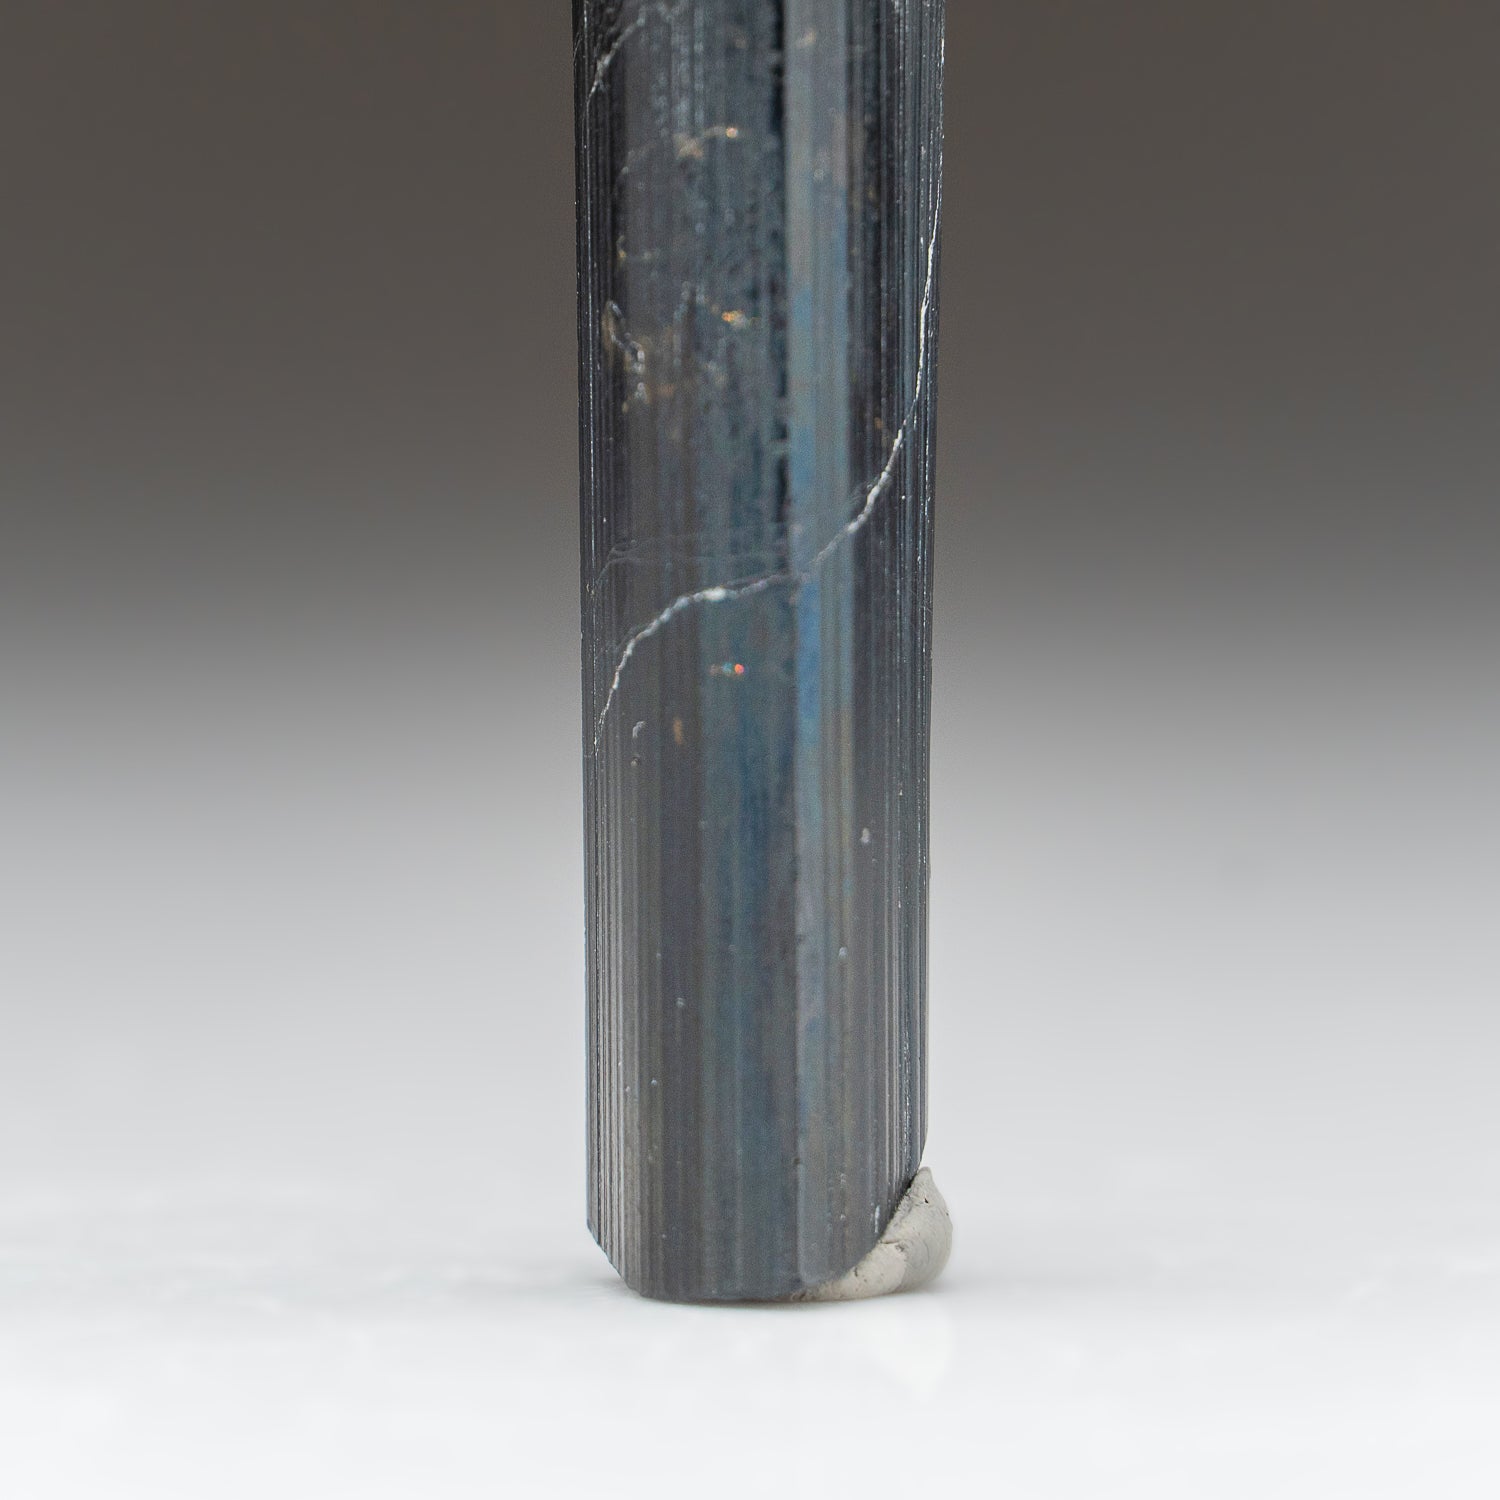 Black Tourmaline Crystal From Brazil (26.4 grams)